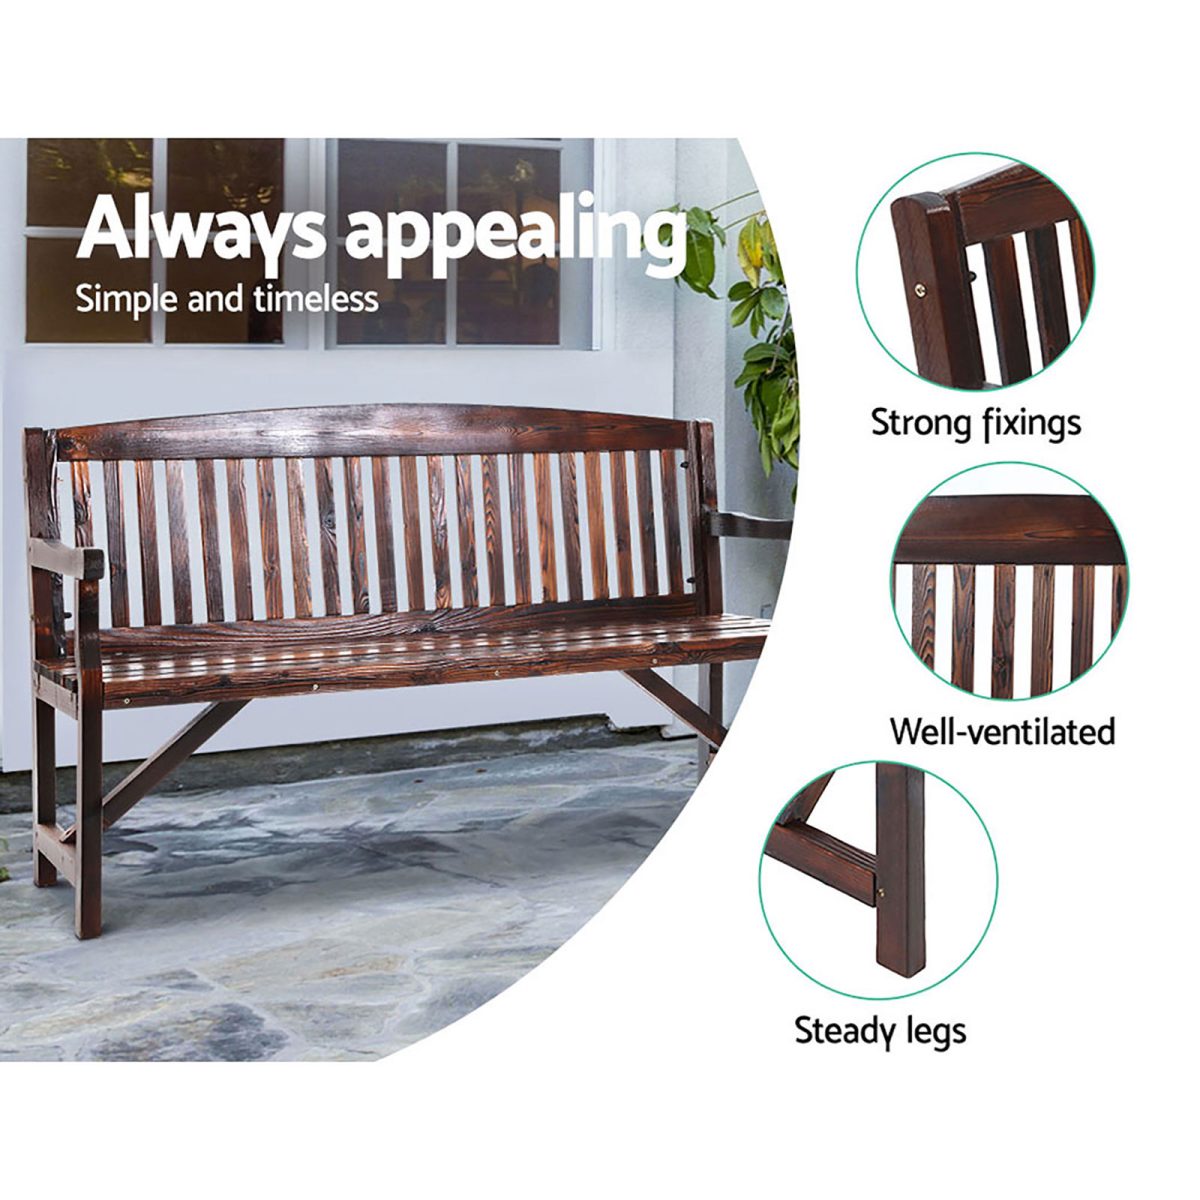 Gardeon Wooden Garden Bench Chair Outdoor Furniture Decor Patio Deck 3 Seater – Brown